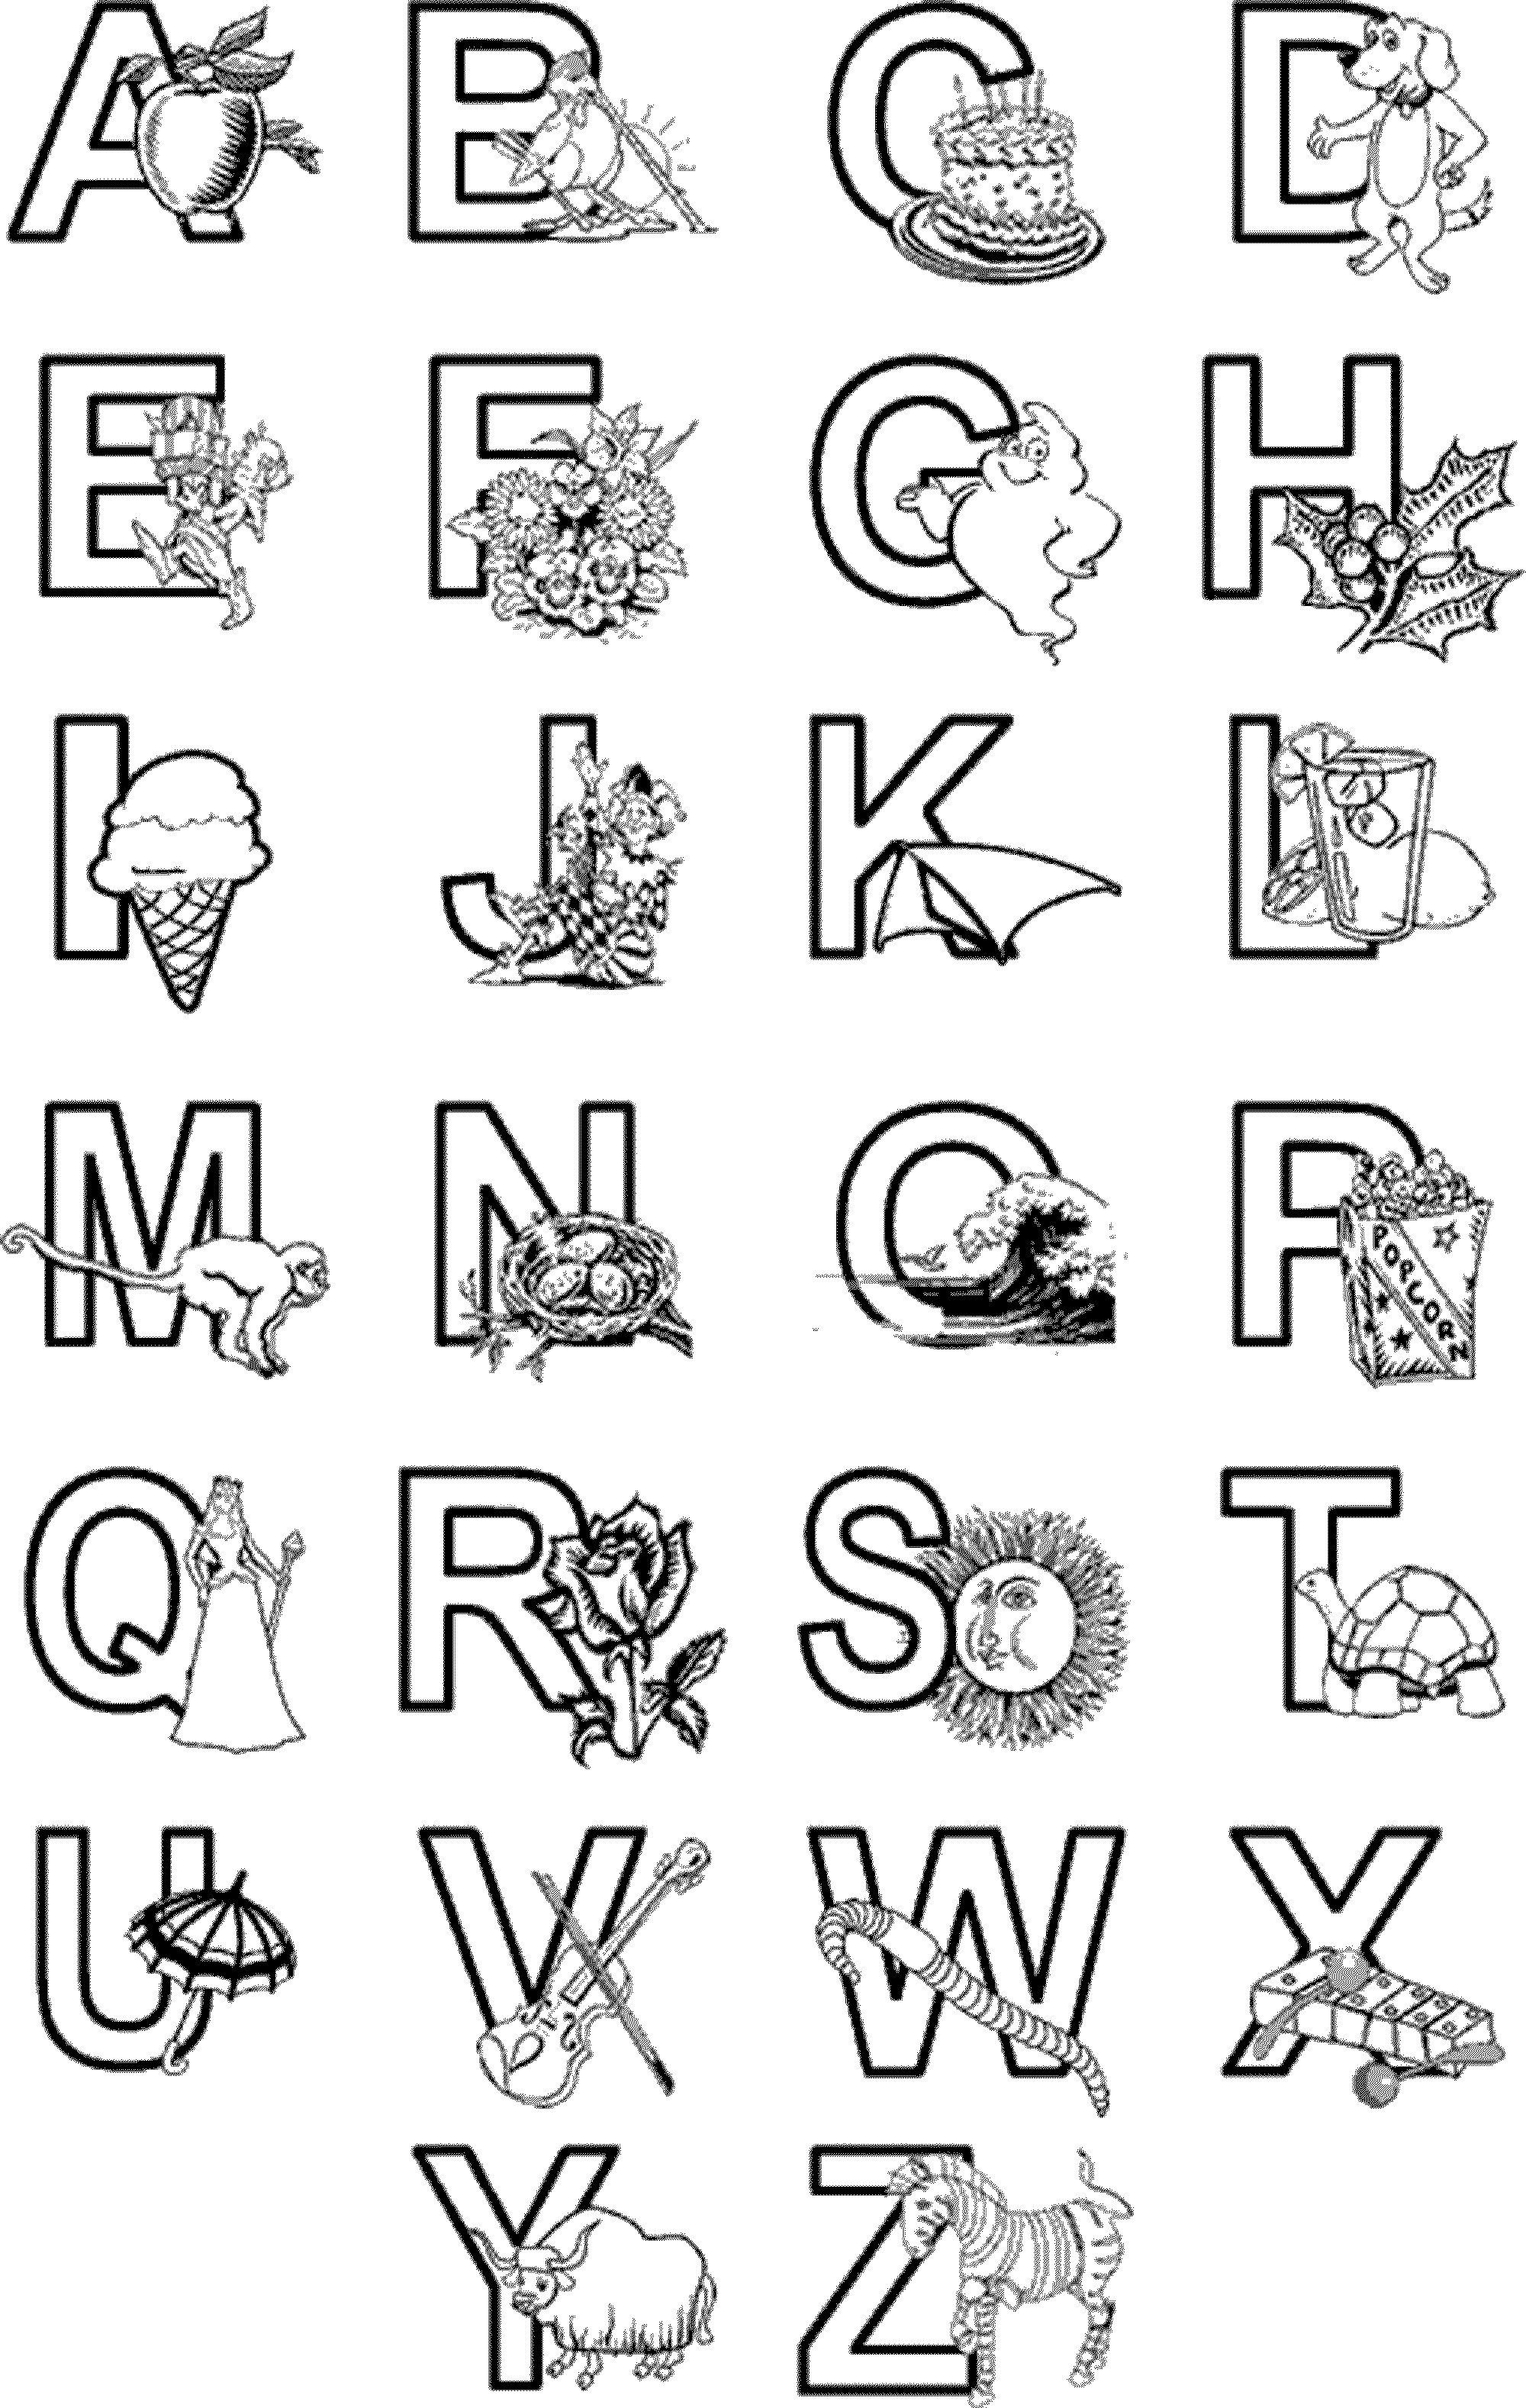 Alphabet Coloring Pages Pdf
 Letters Coloring Pages to Print Tags Letters Coloring Page